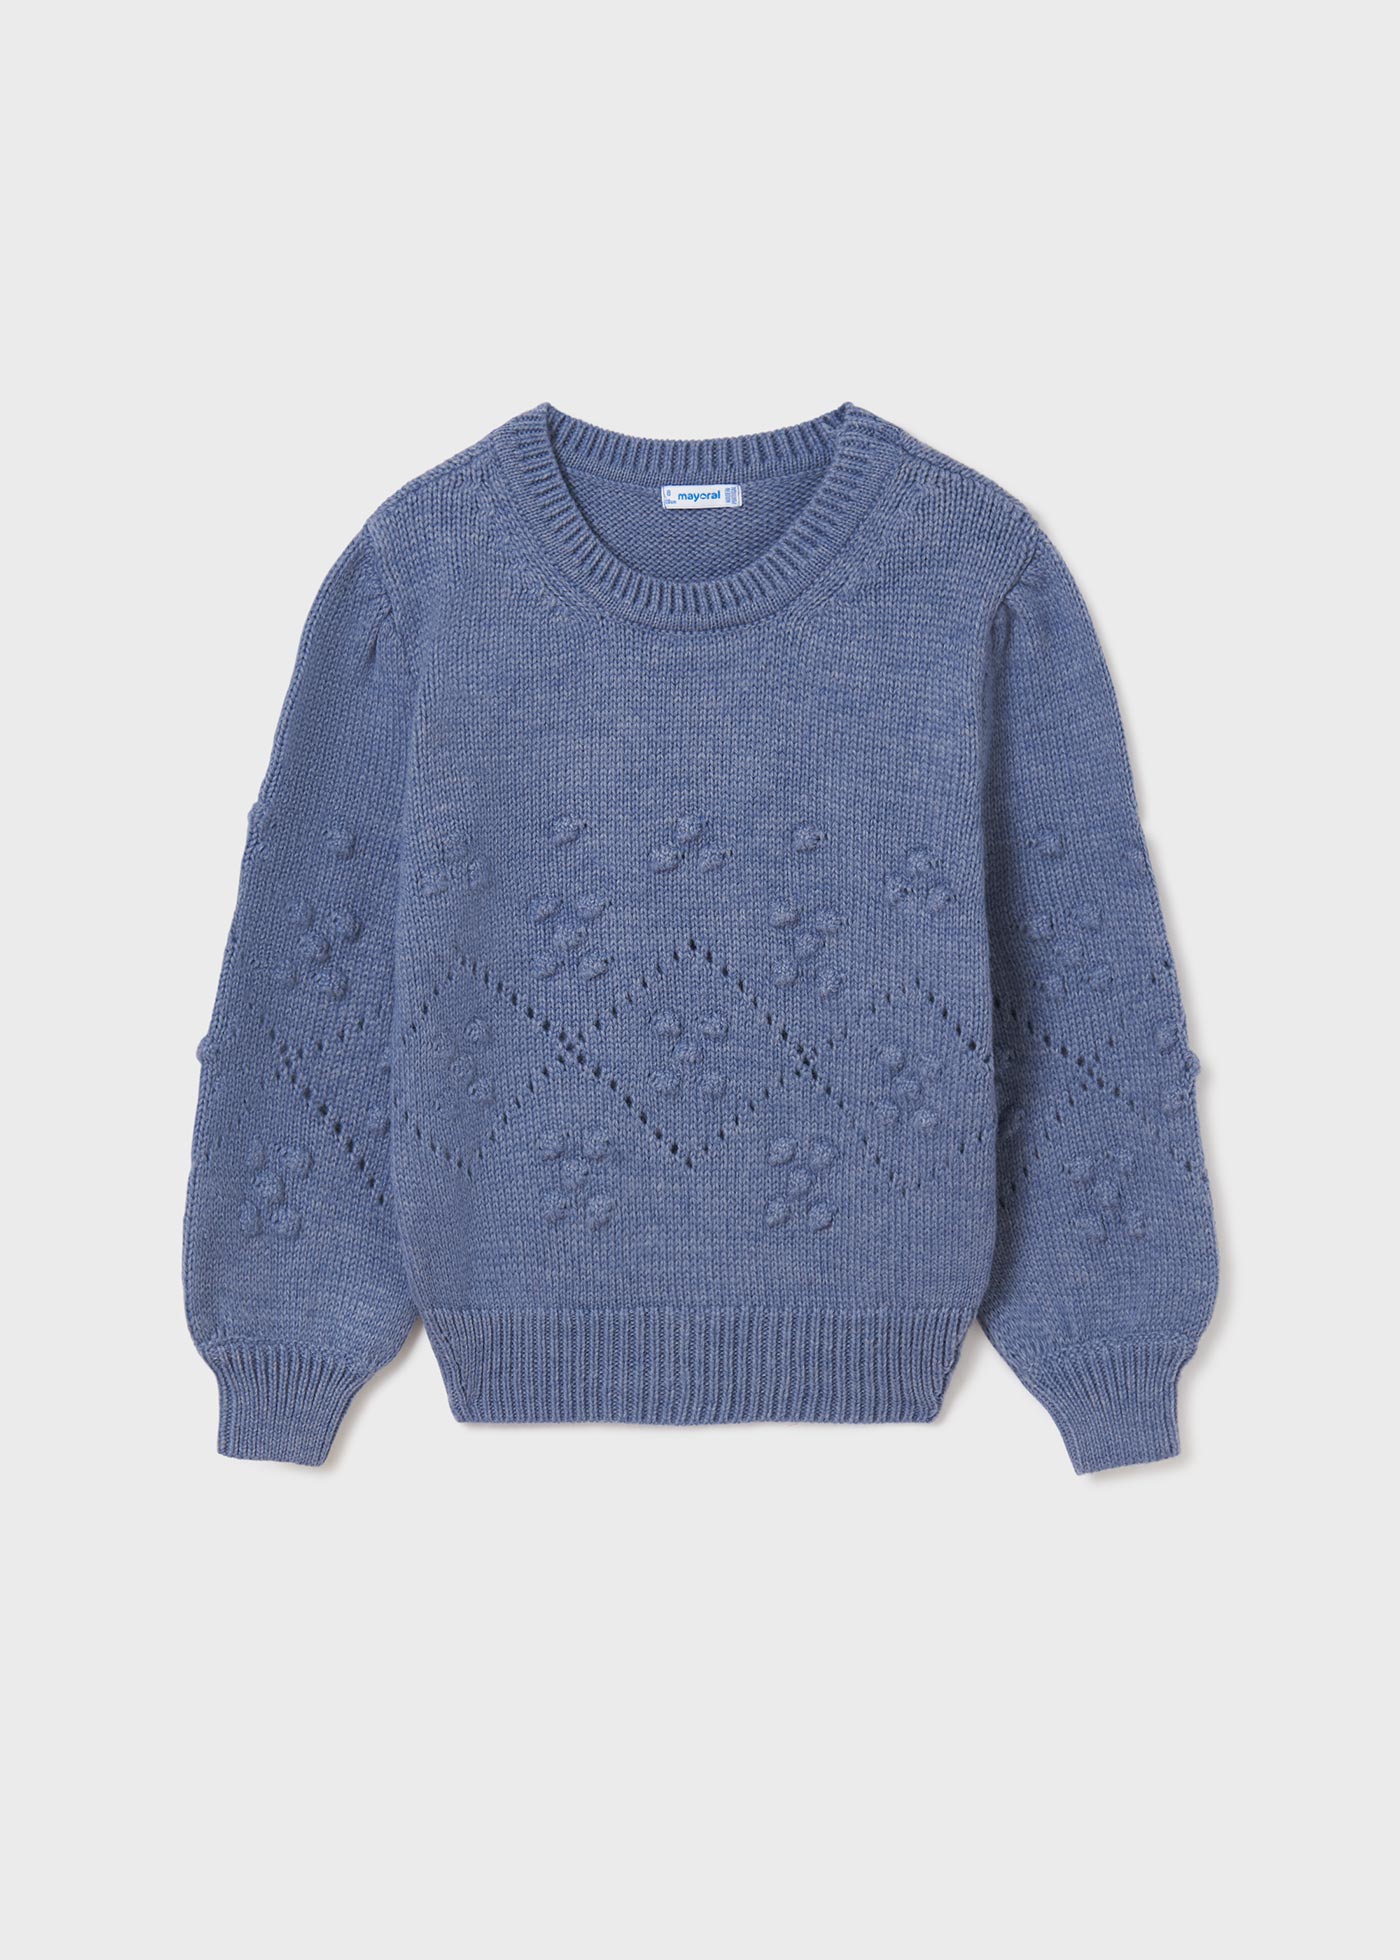 Pom Pom Sweater- Indigo